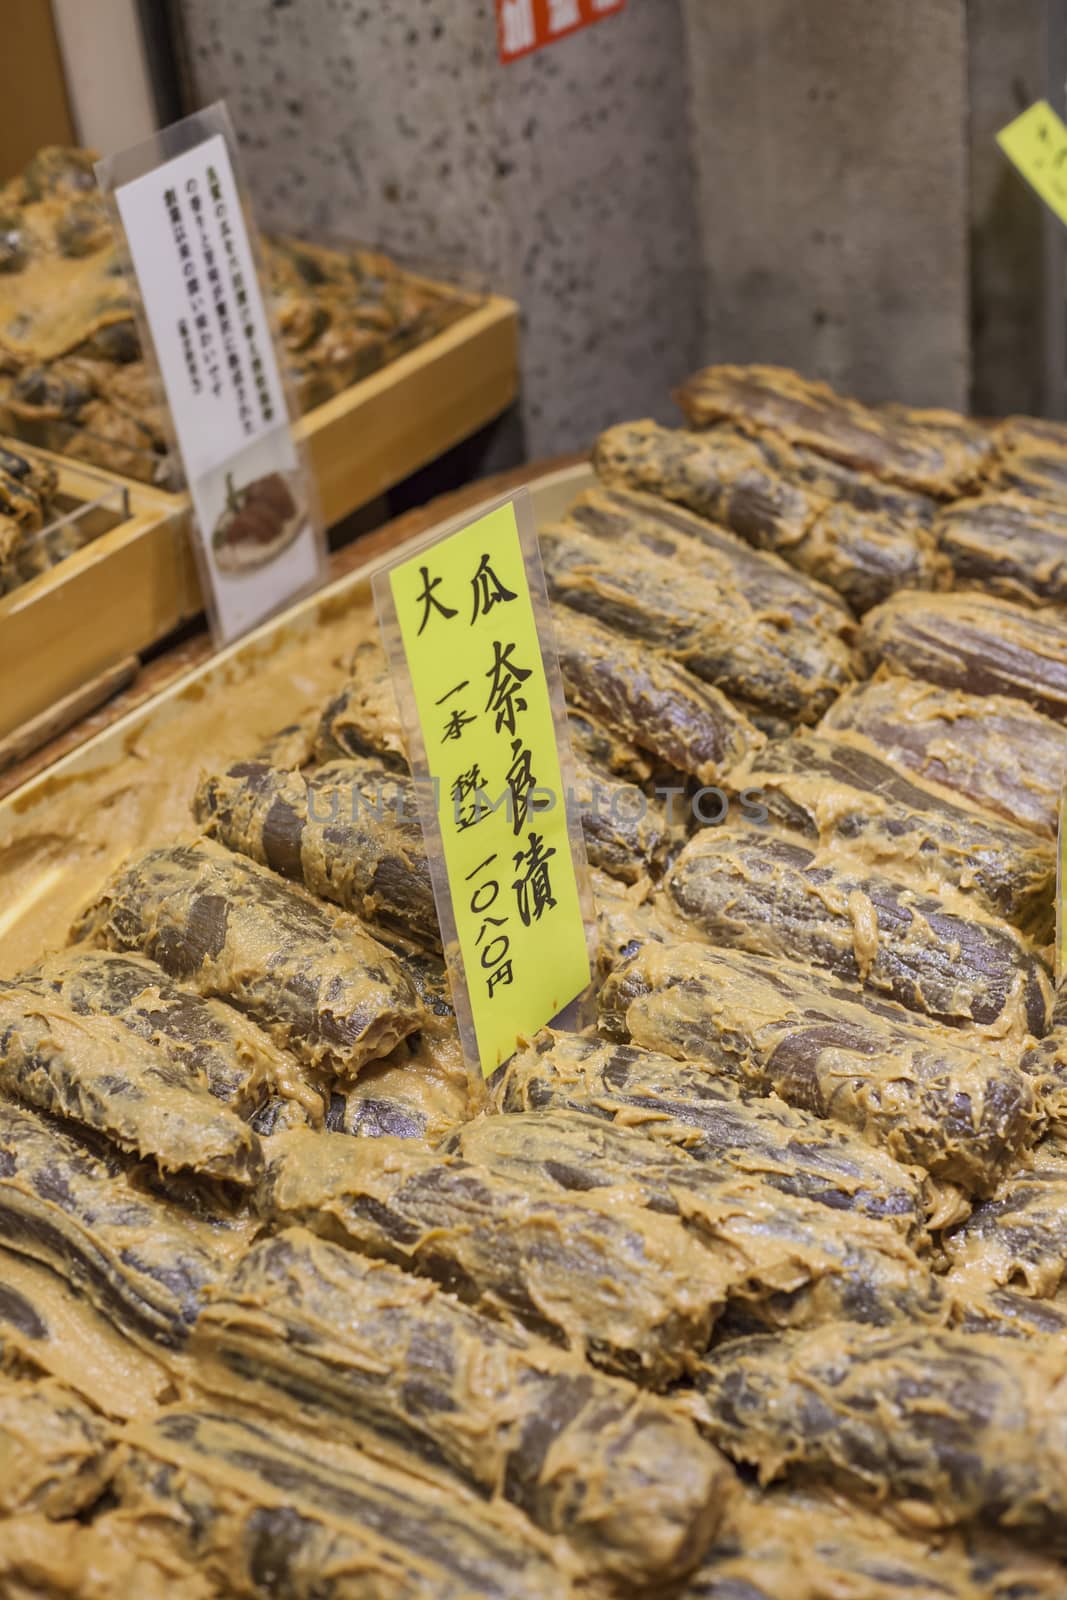 Traditional food market in Kyoto. Japan. by mariusz_prusaczyk